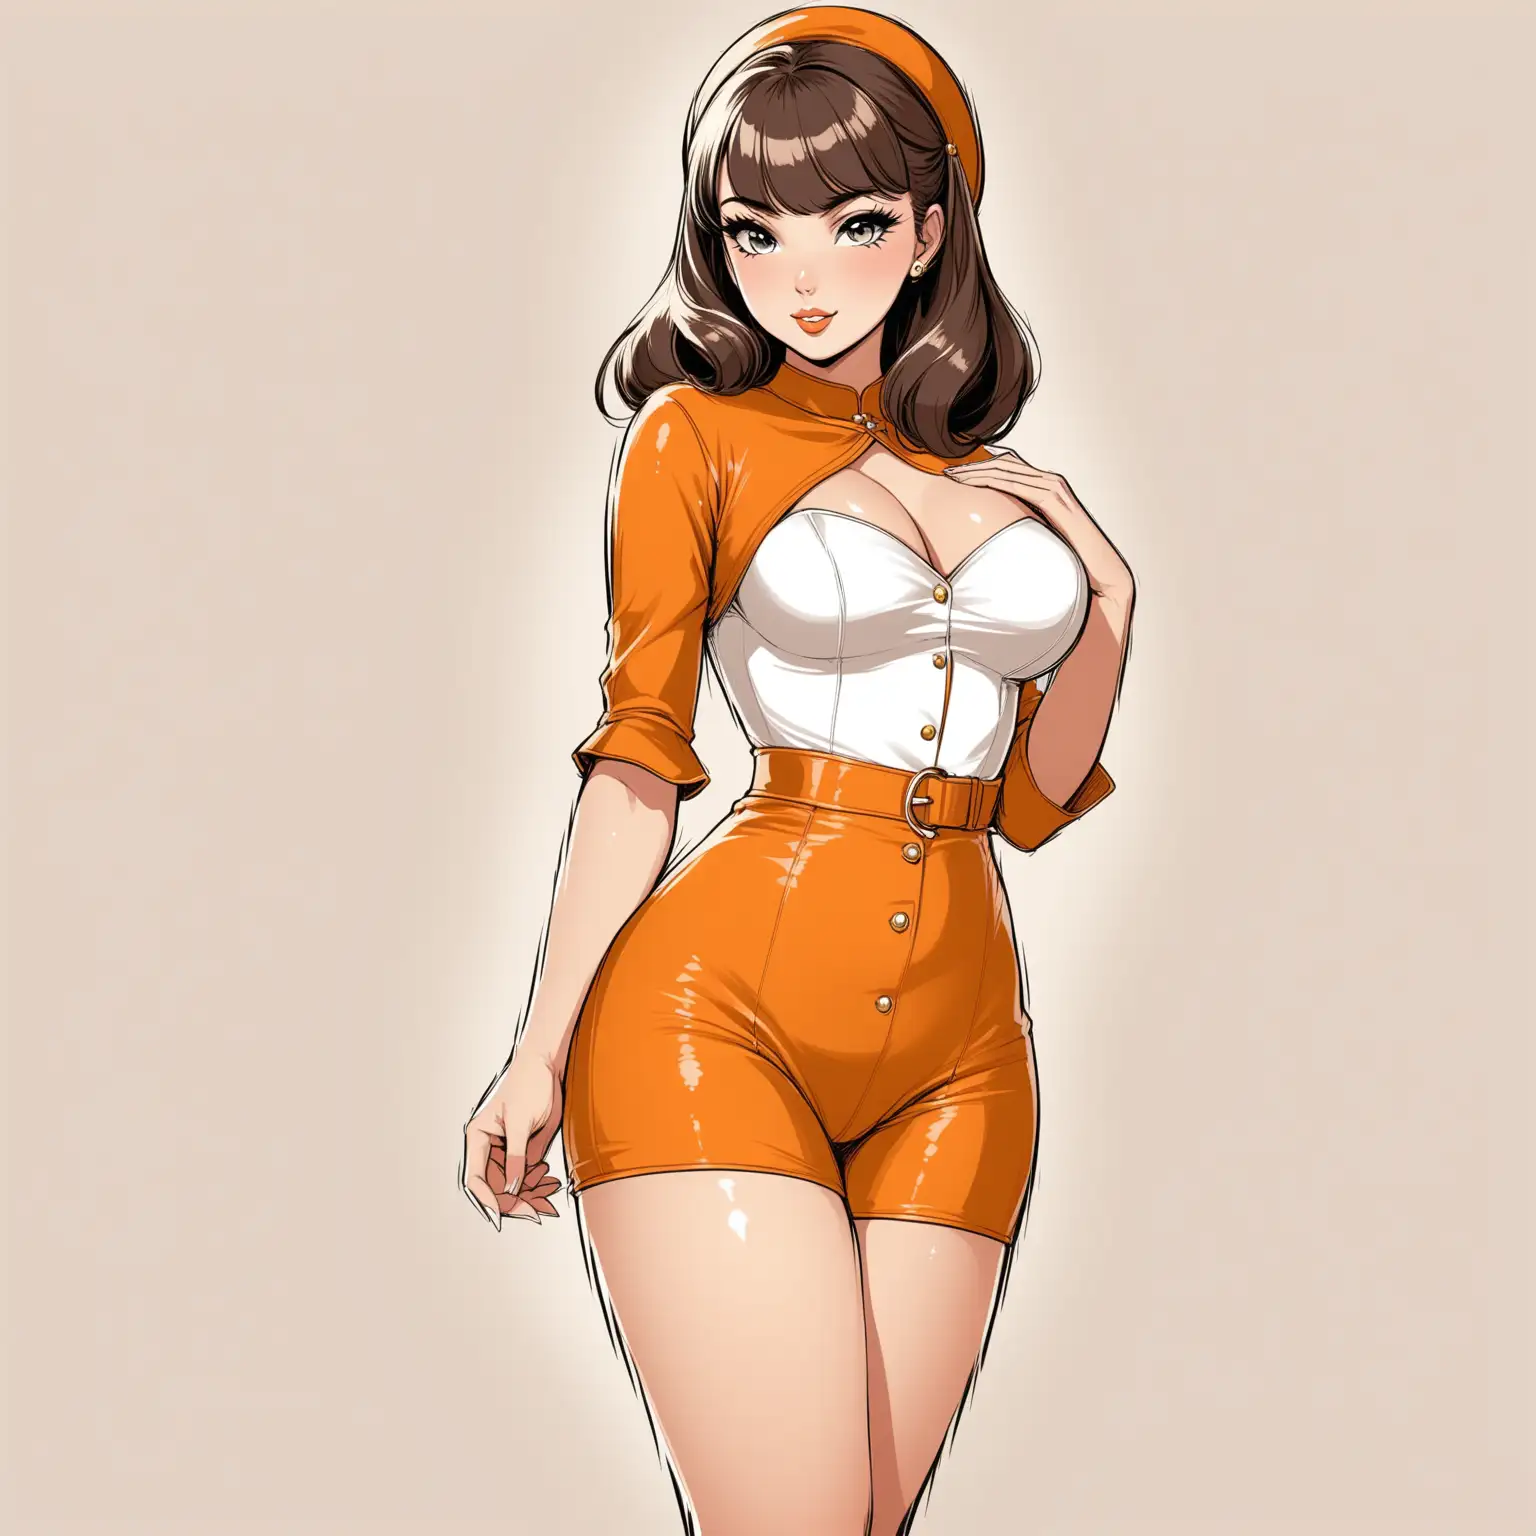 Beautiful, sexy, hot waifu small waist, big ass, sexy and seductive 60s style outfit